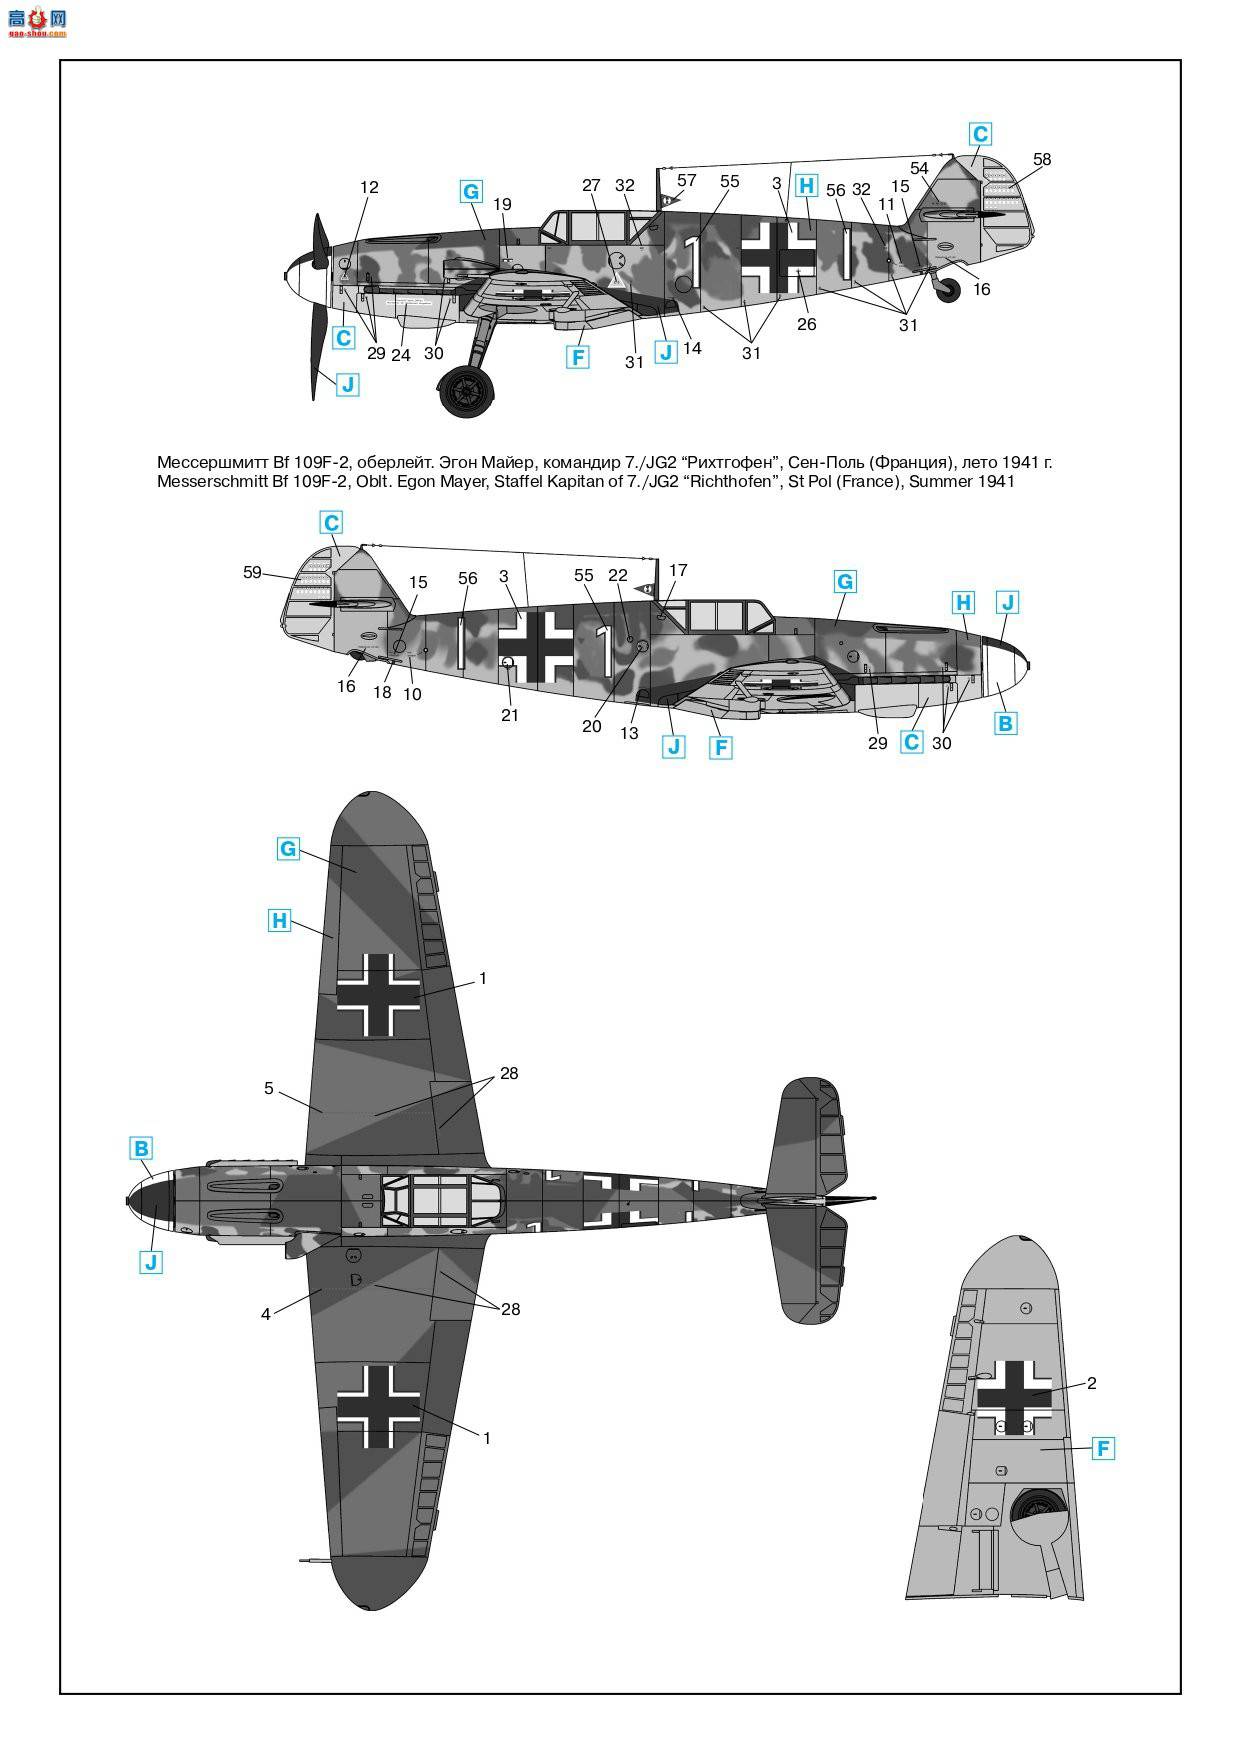 ICM ս 48102 ս¾ս ÷ʩ Bf 109F-2